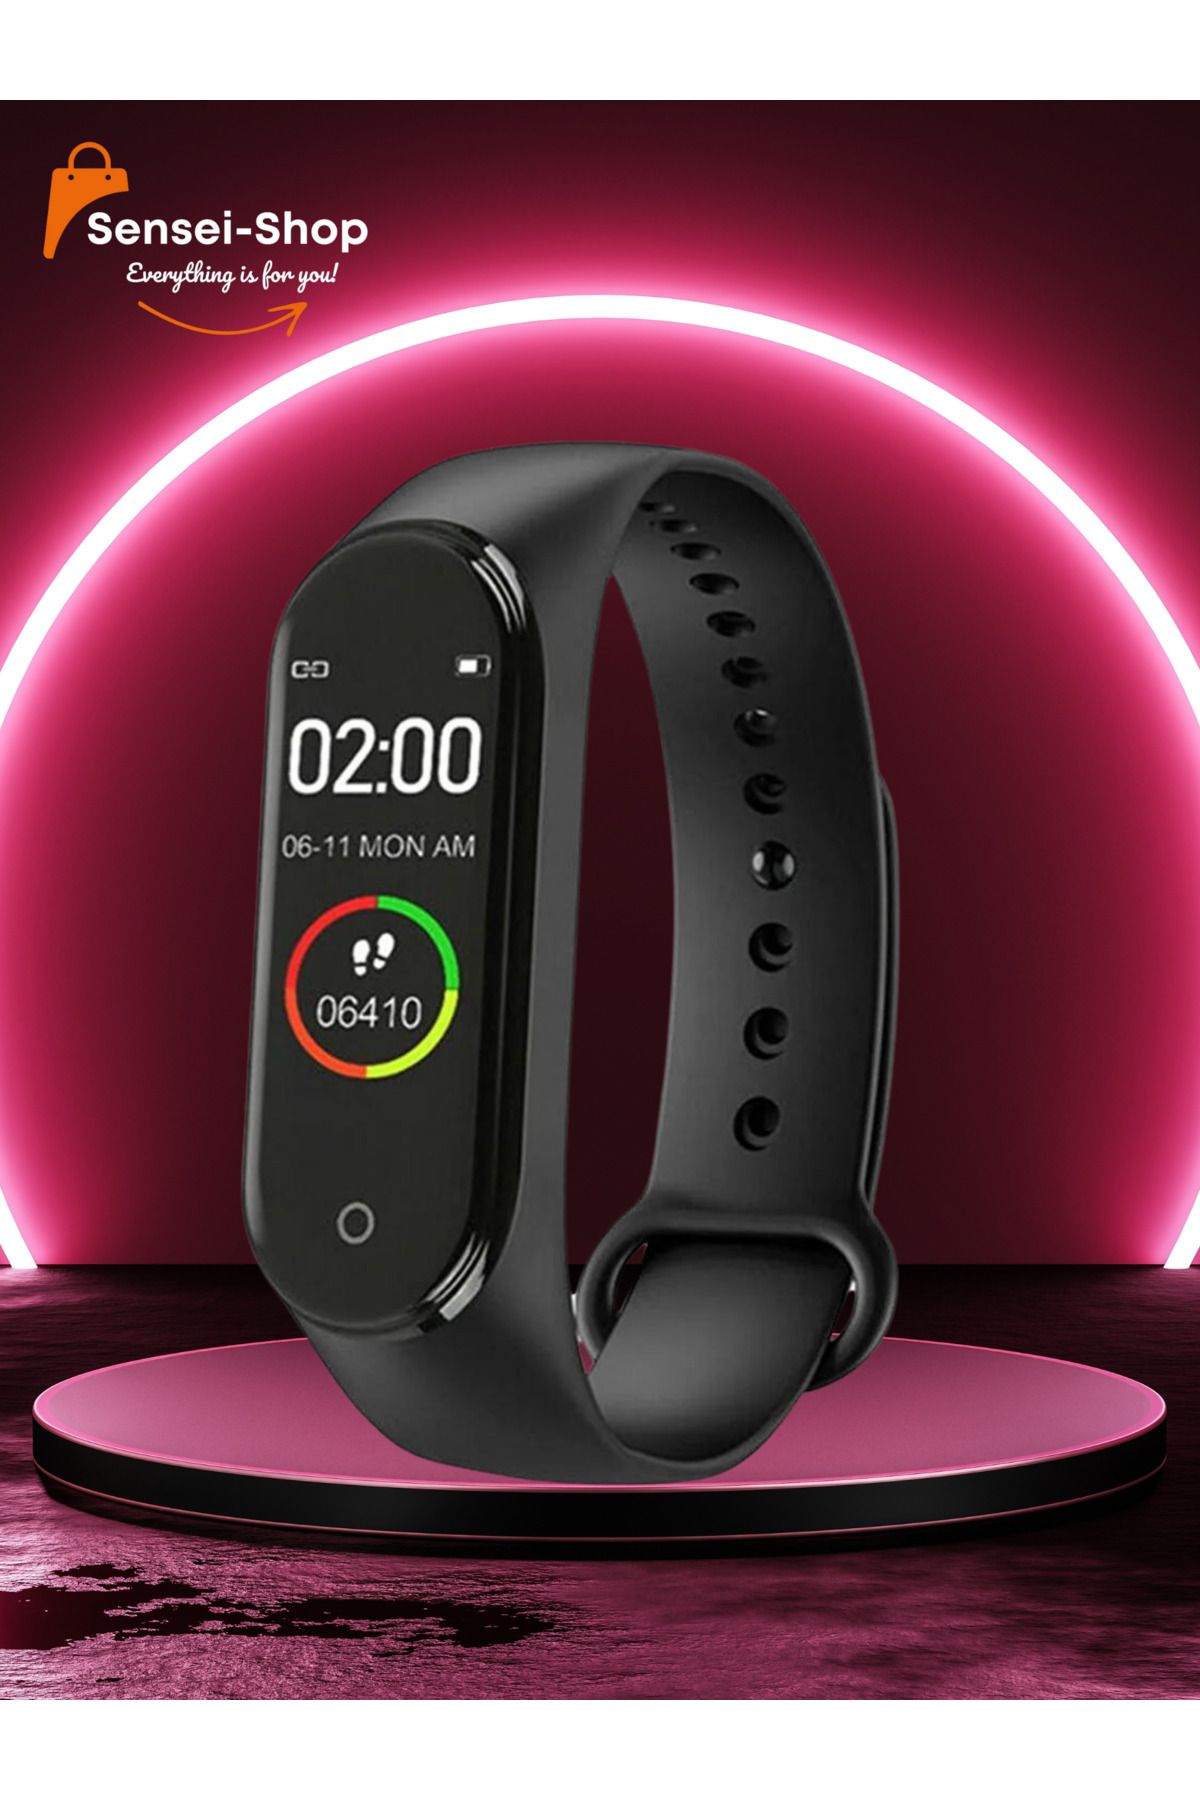 LONG NECK M4 Akıllı Saat ve Bileklik - Renkli Ekran, iOS ve Android Uyumlu, 1. Kalite